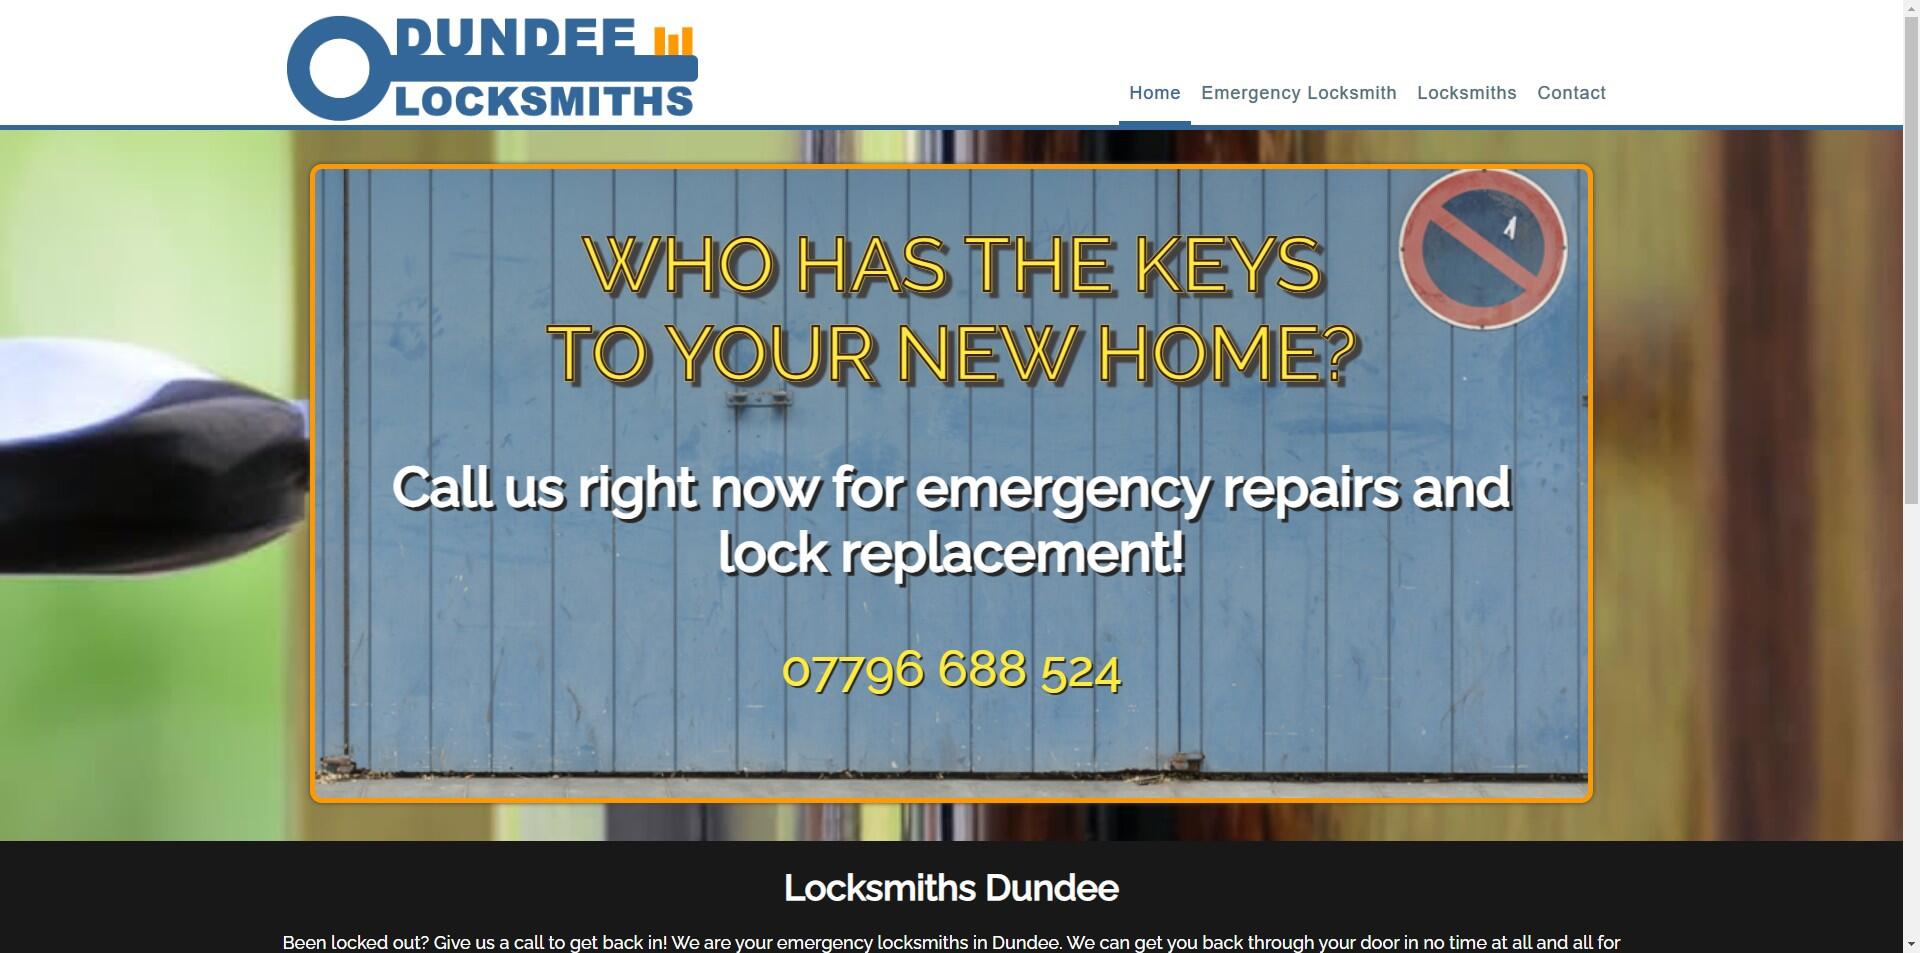 website designed for Dundee Locksmiths